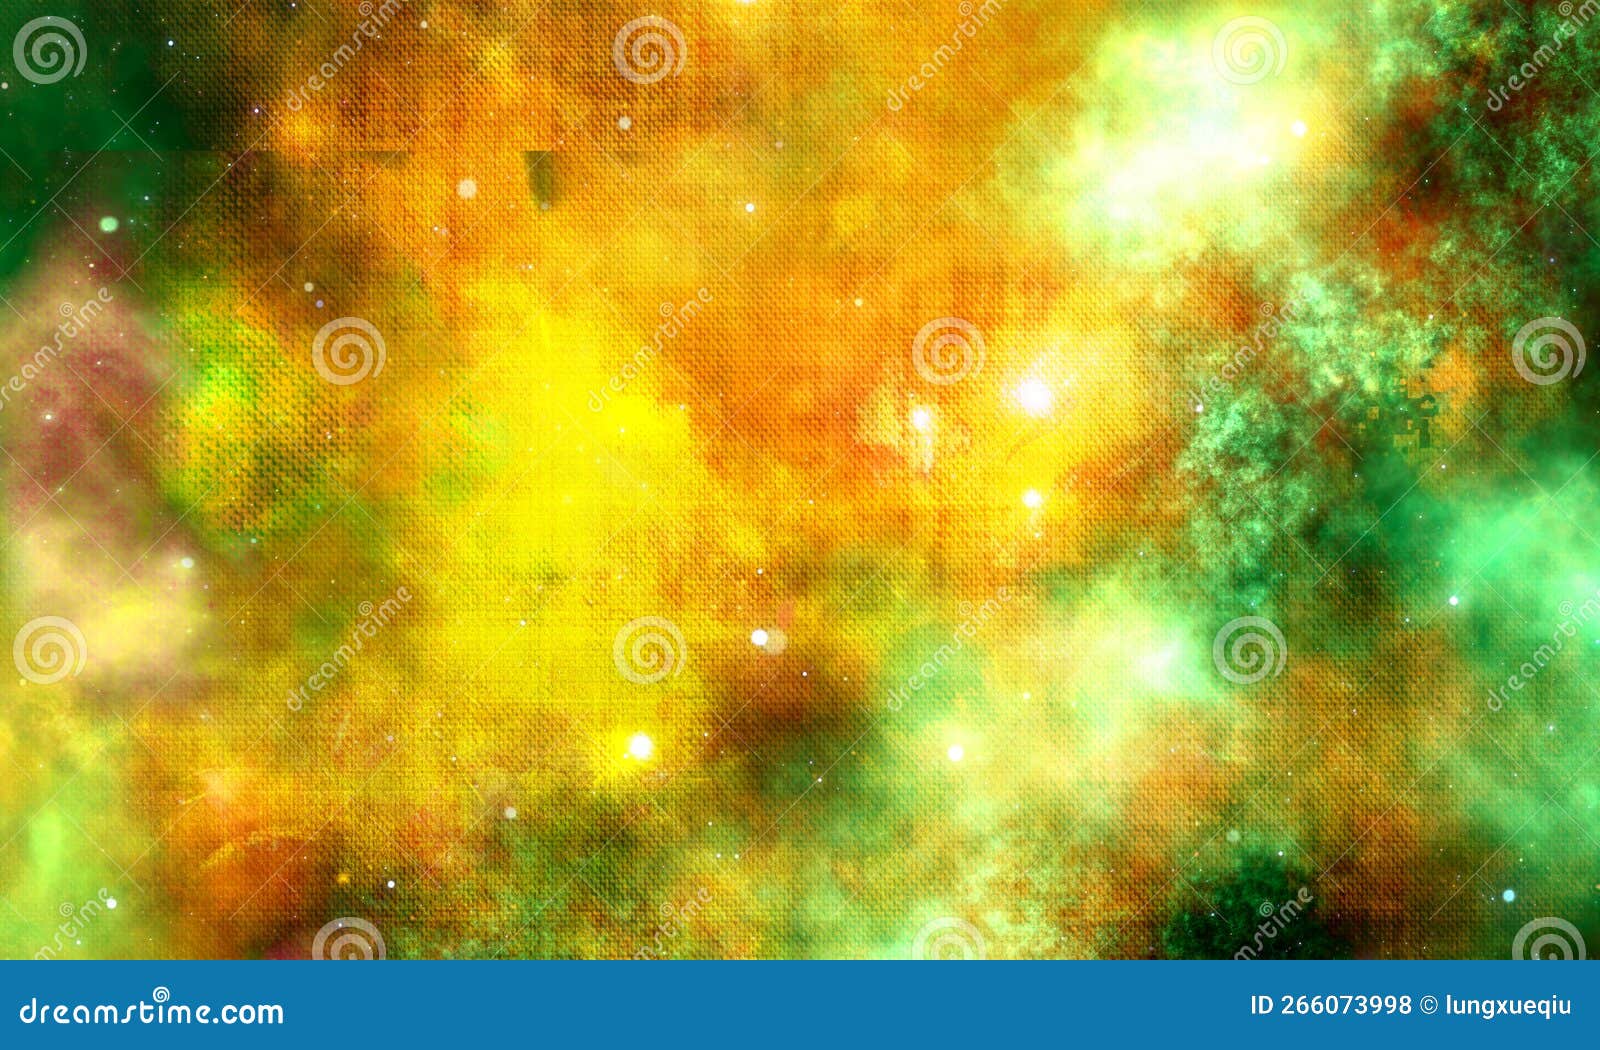 Orange Galaxy Wallpapers - Wallpaper Cave